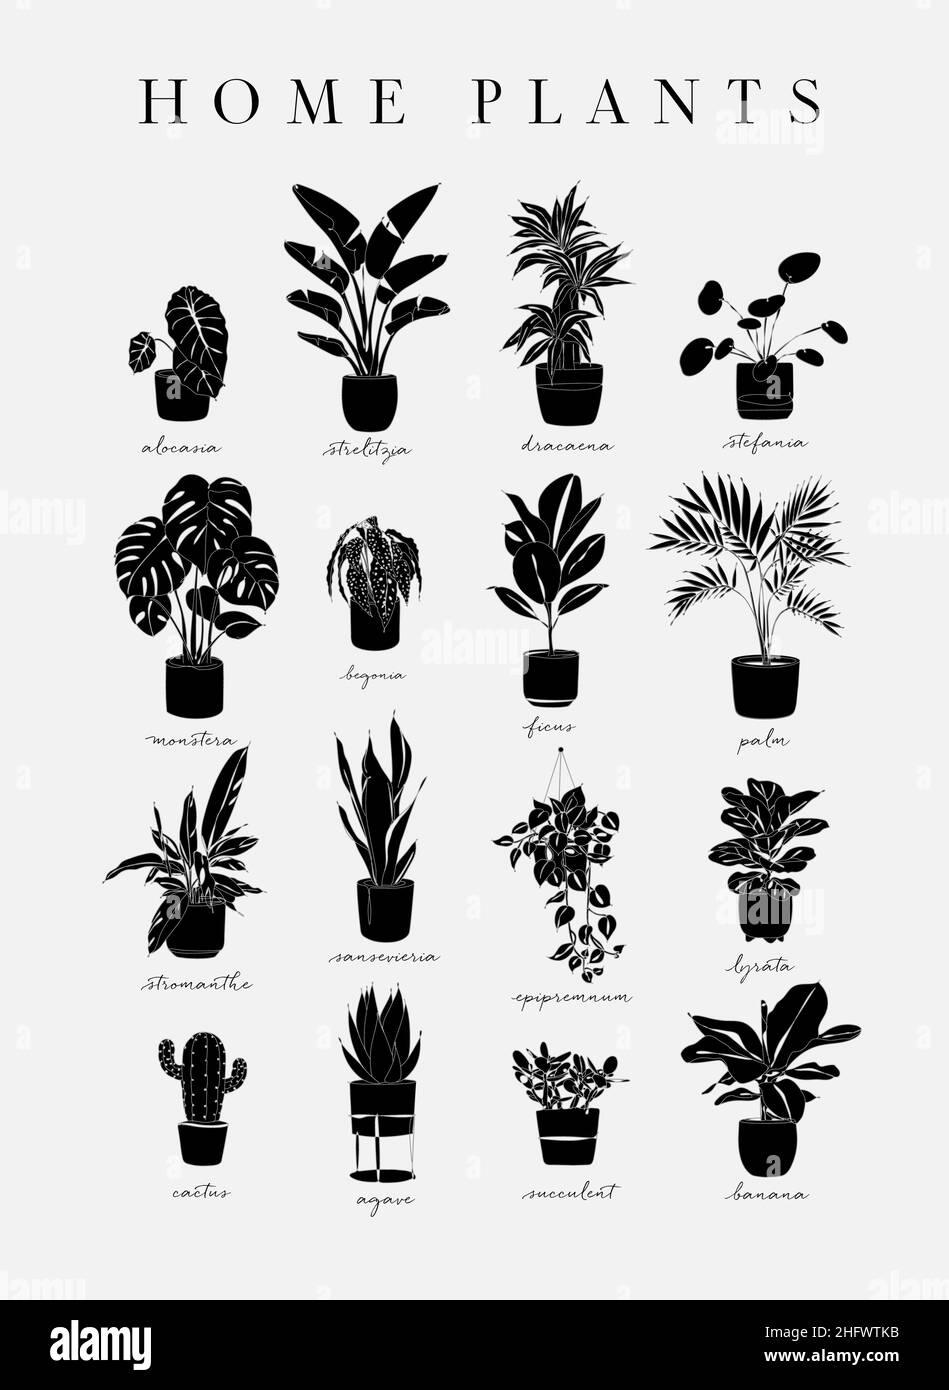 Poster home plants in linear style alocasia, strelitzia, dracaena, stefania, monster, begonia, ficus, palm, stromanthe, epipremnum, lyrata, cactus, ag Stock Vector